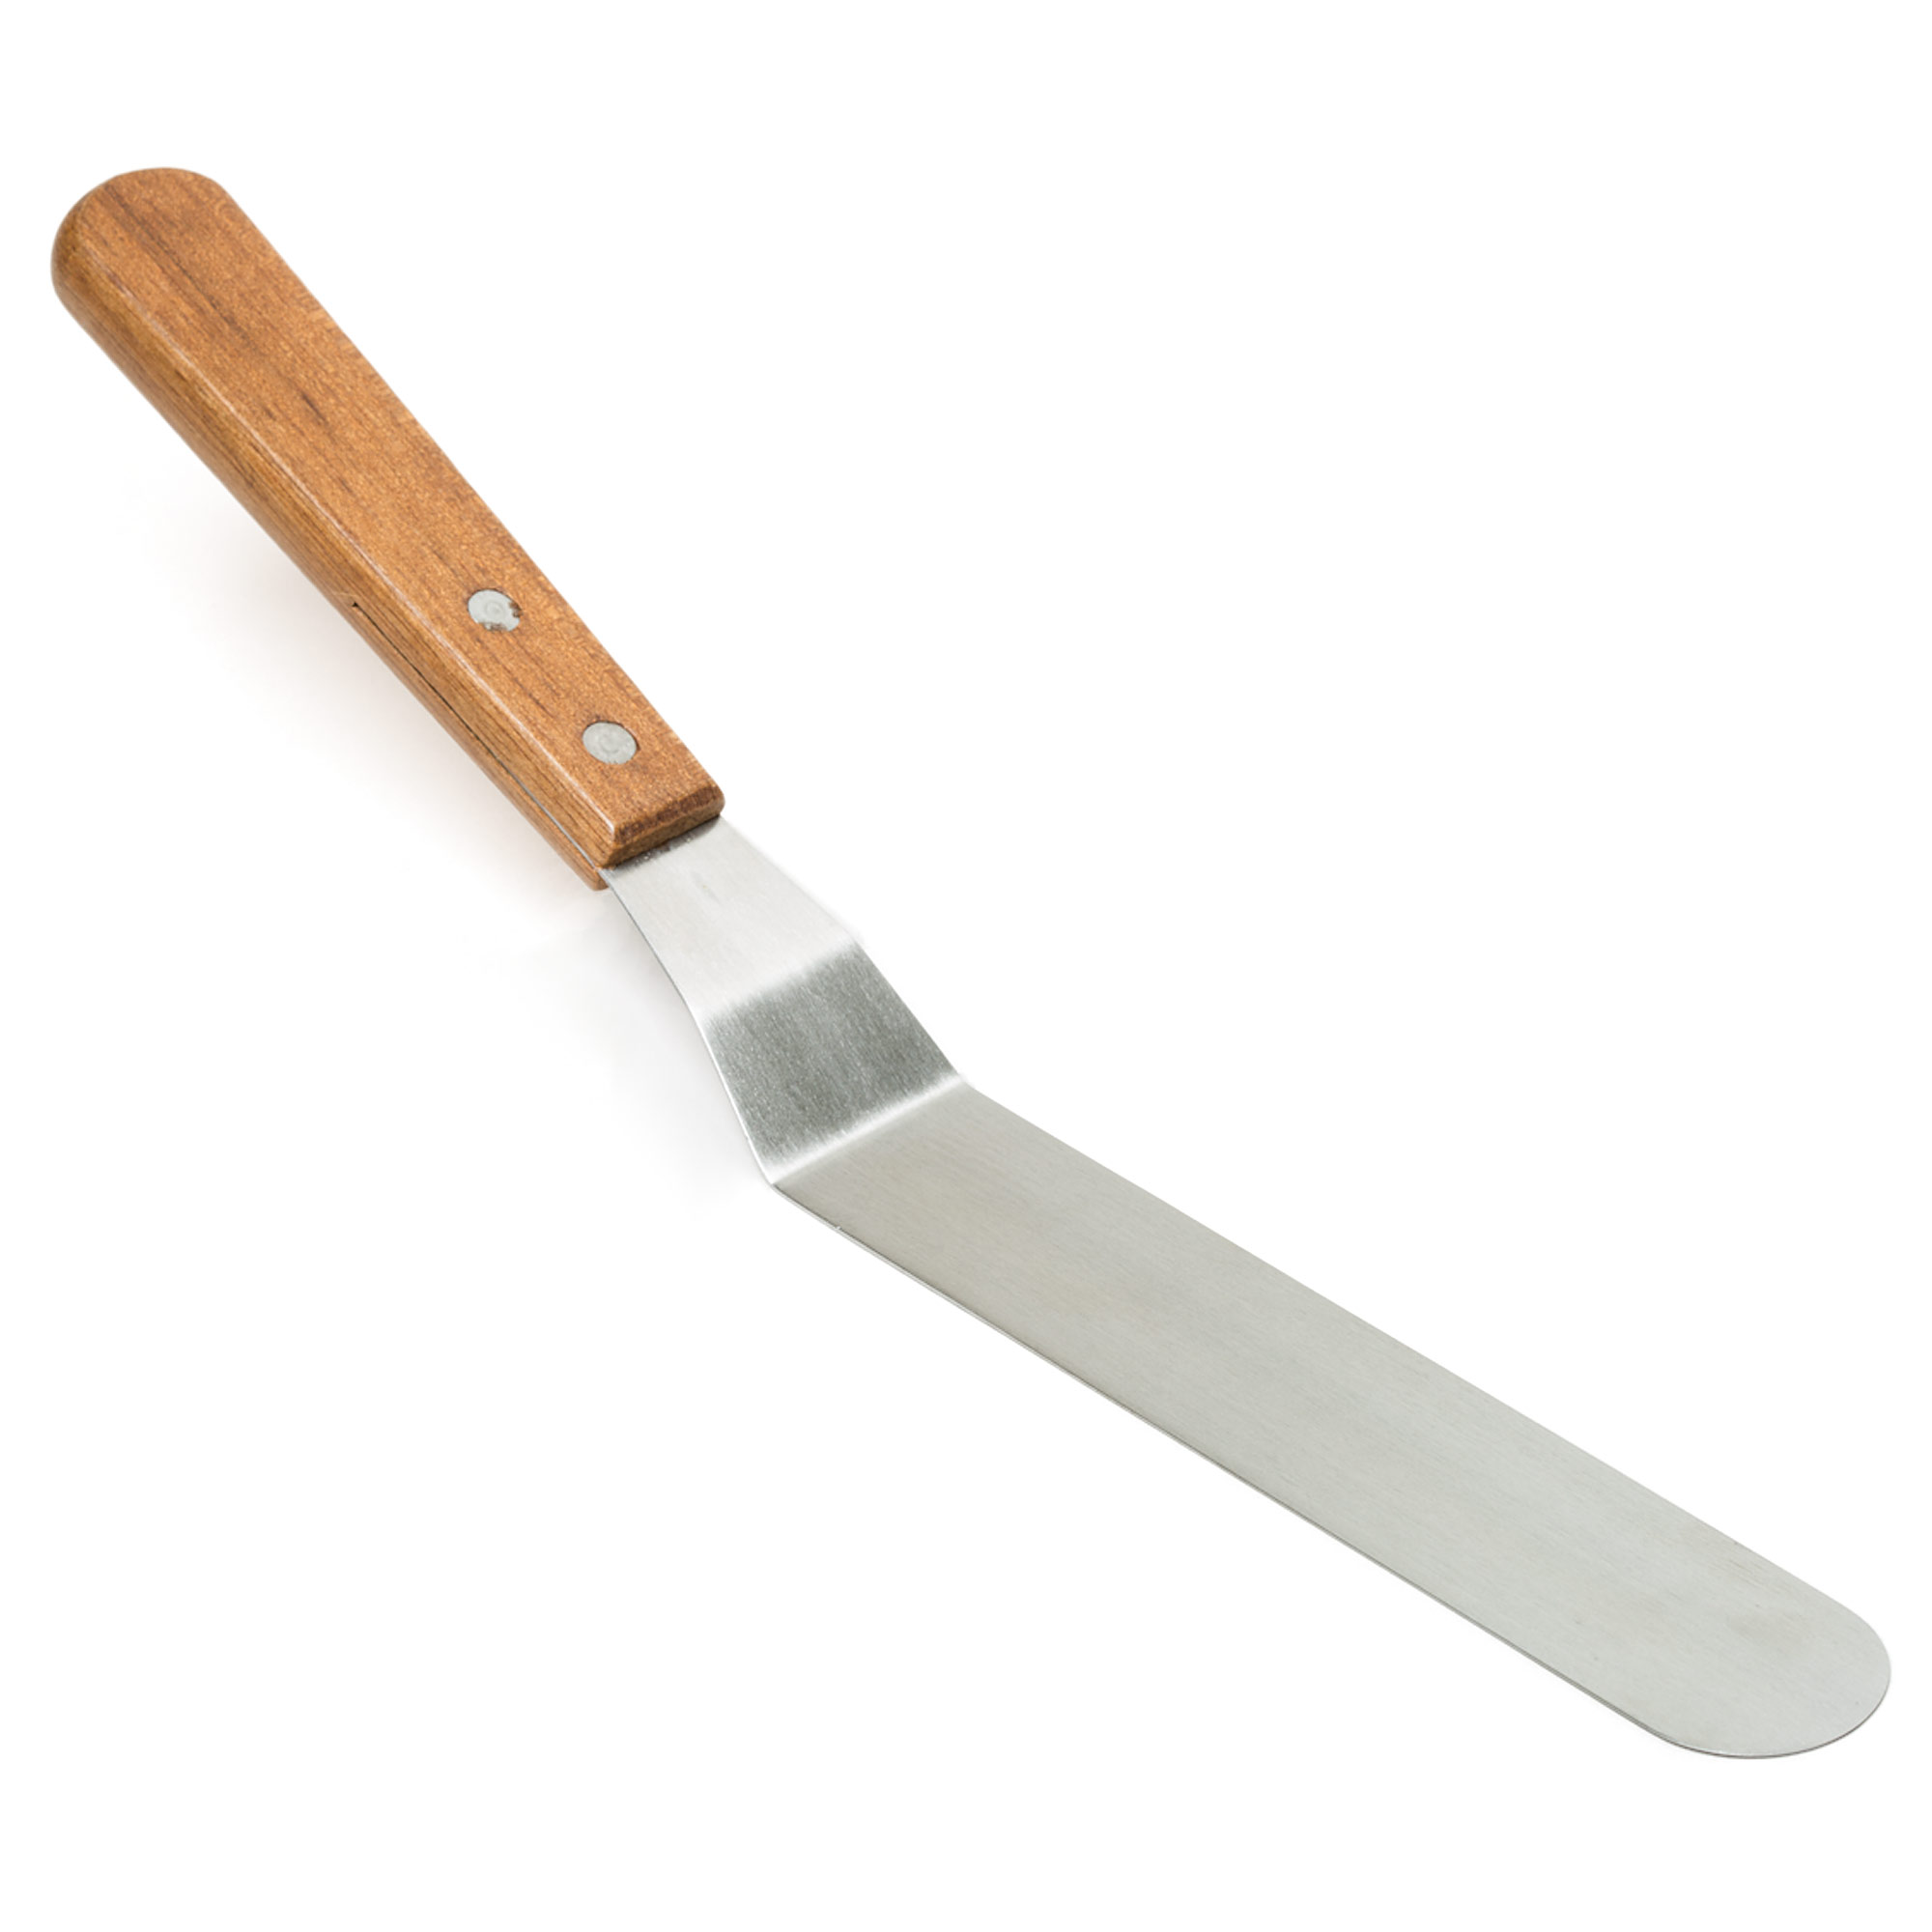 https://res.cloudinary.com/hksqkdlah/image/upload/24874_sil-offset-spatula-winco-offset-spatula-tos-7.jpg